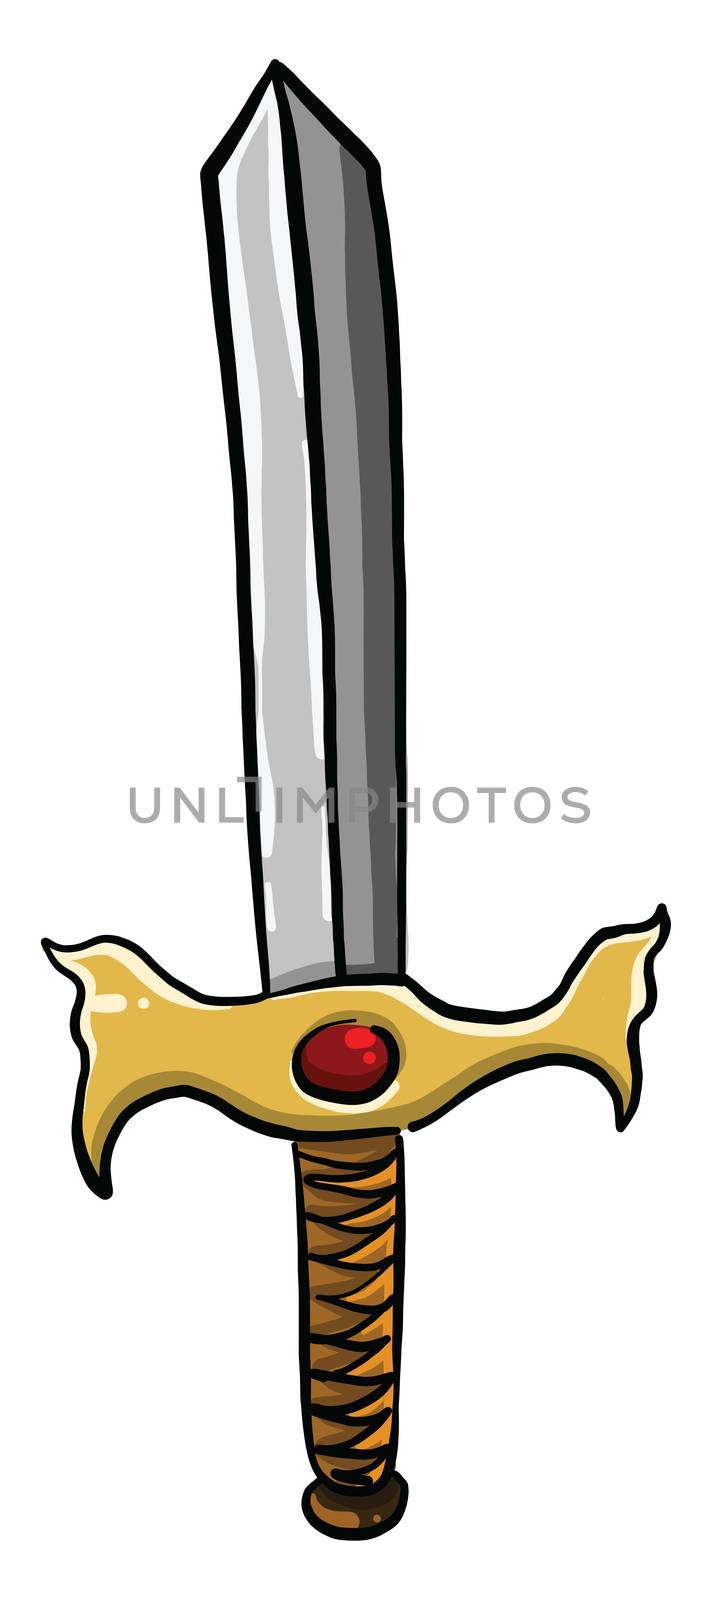 Big sword , illustration, vector on white background